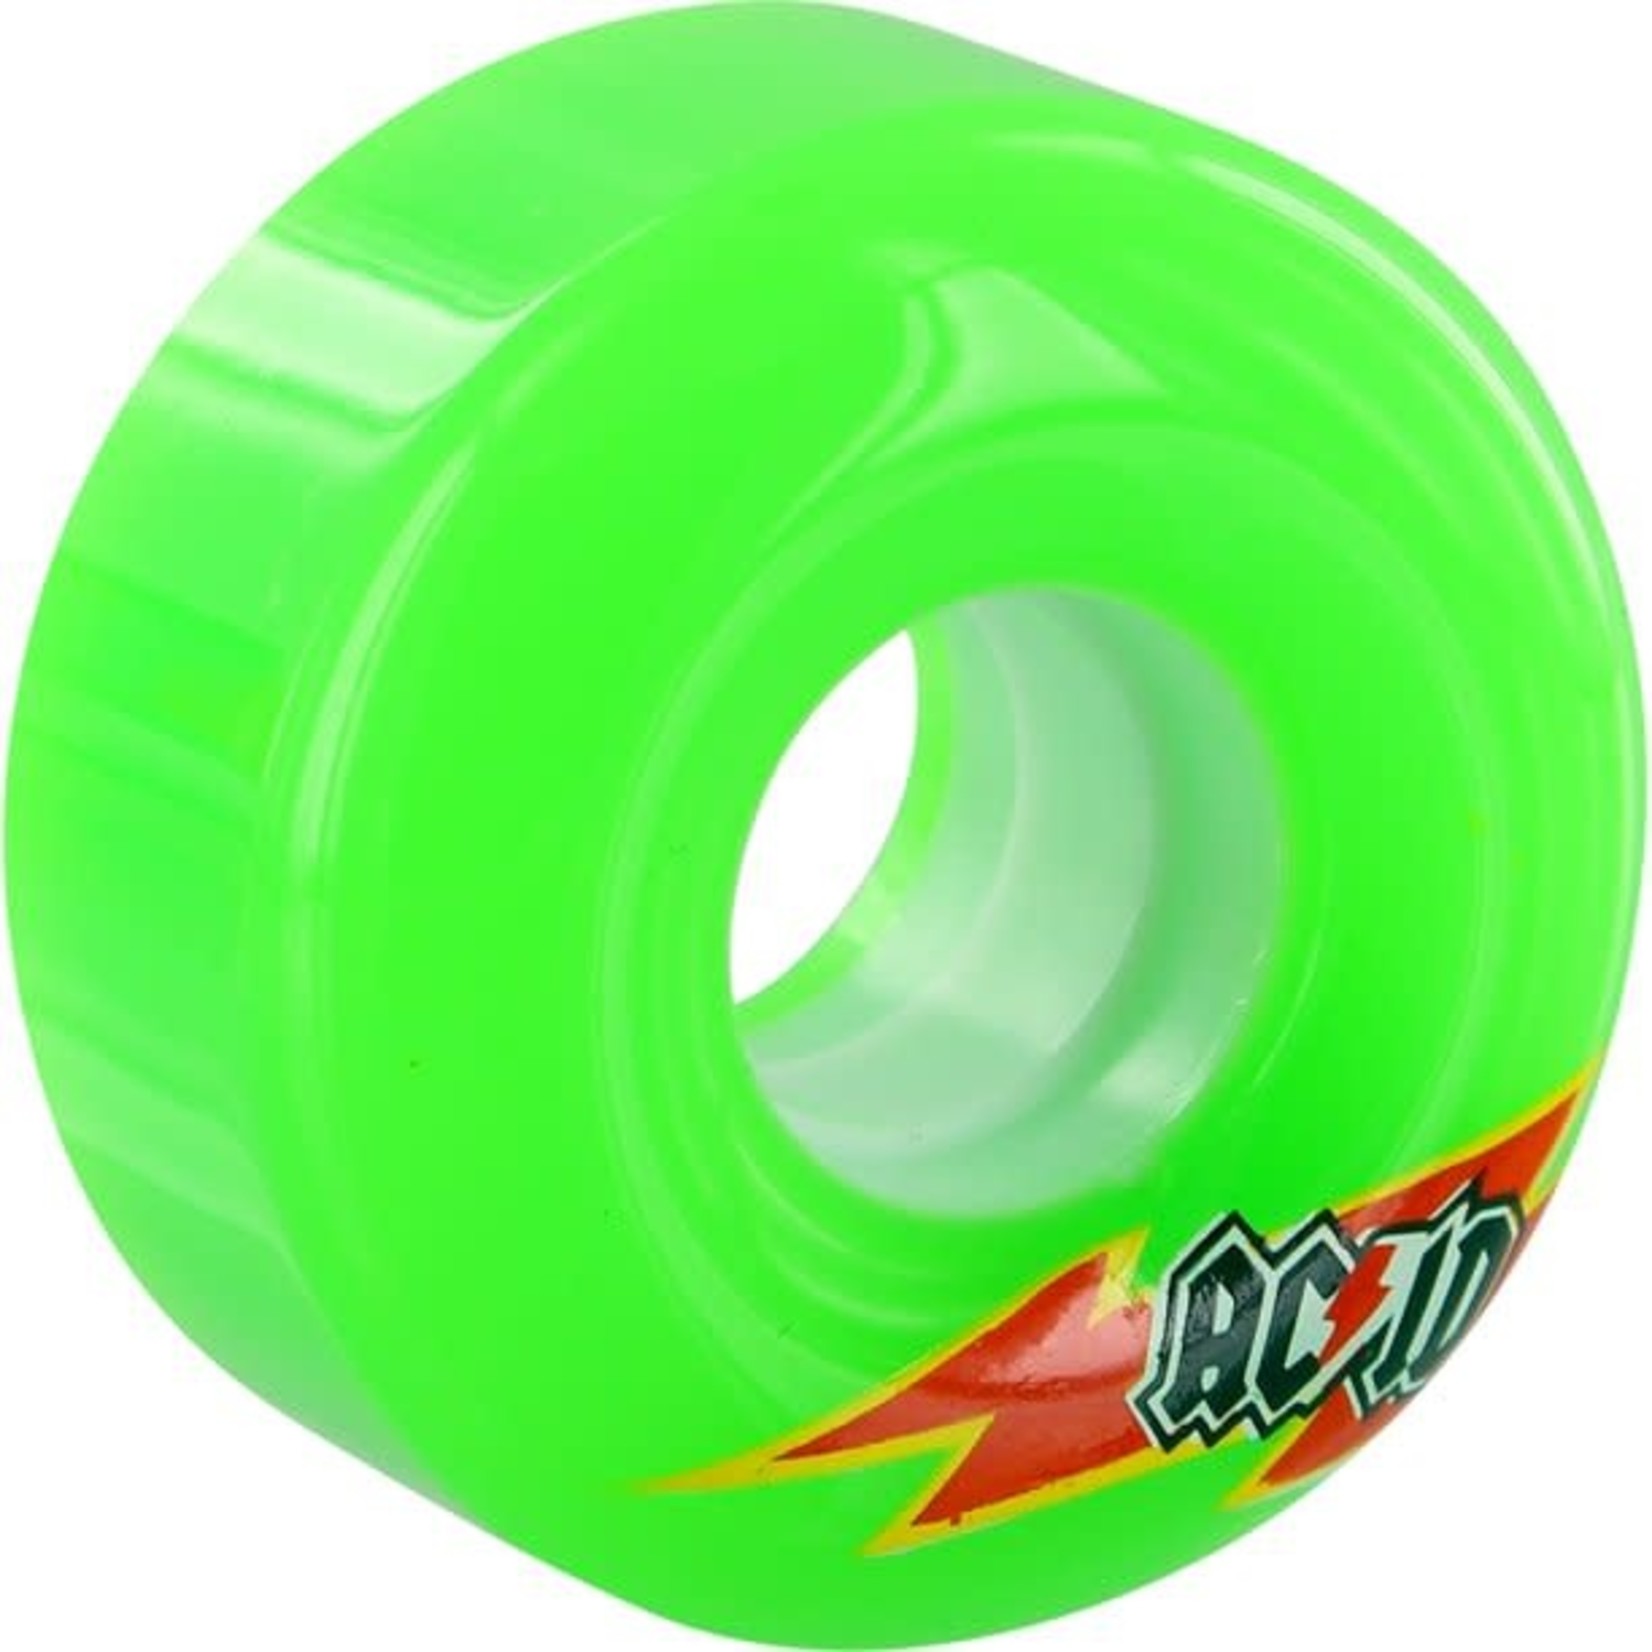 Acid Chemical Co. Acid Skaterade Wheels 56mm  (Set of 4) - Green